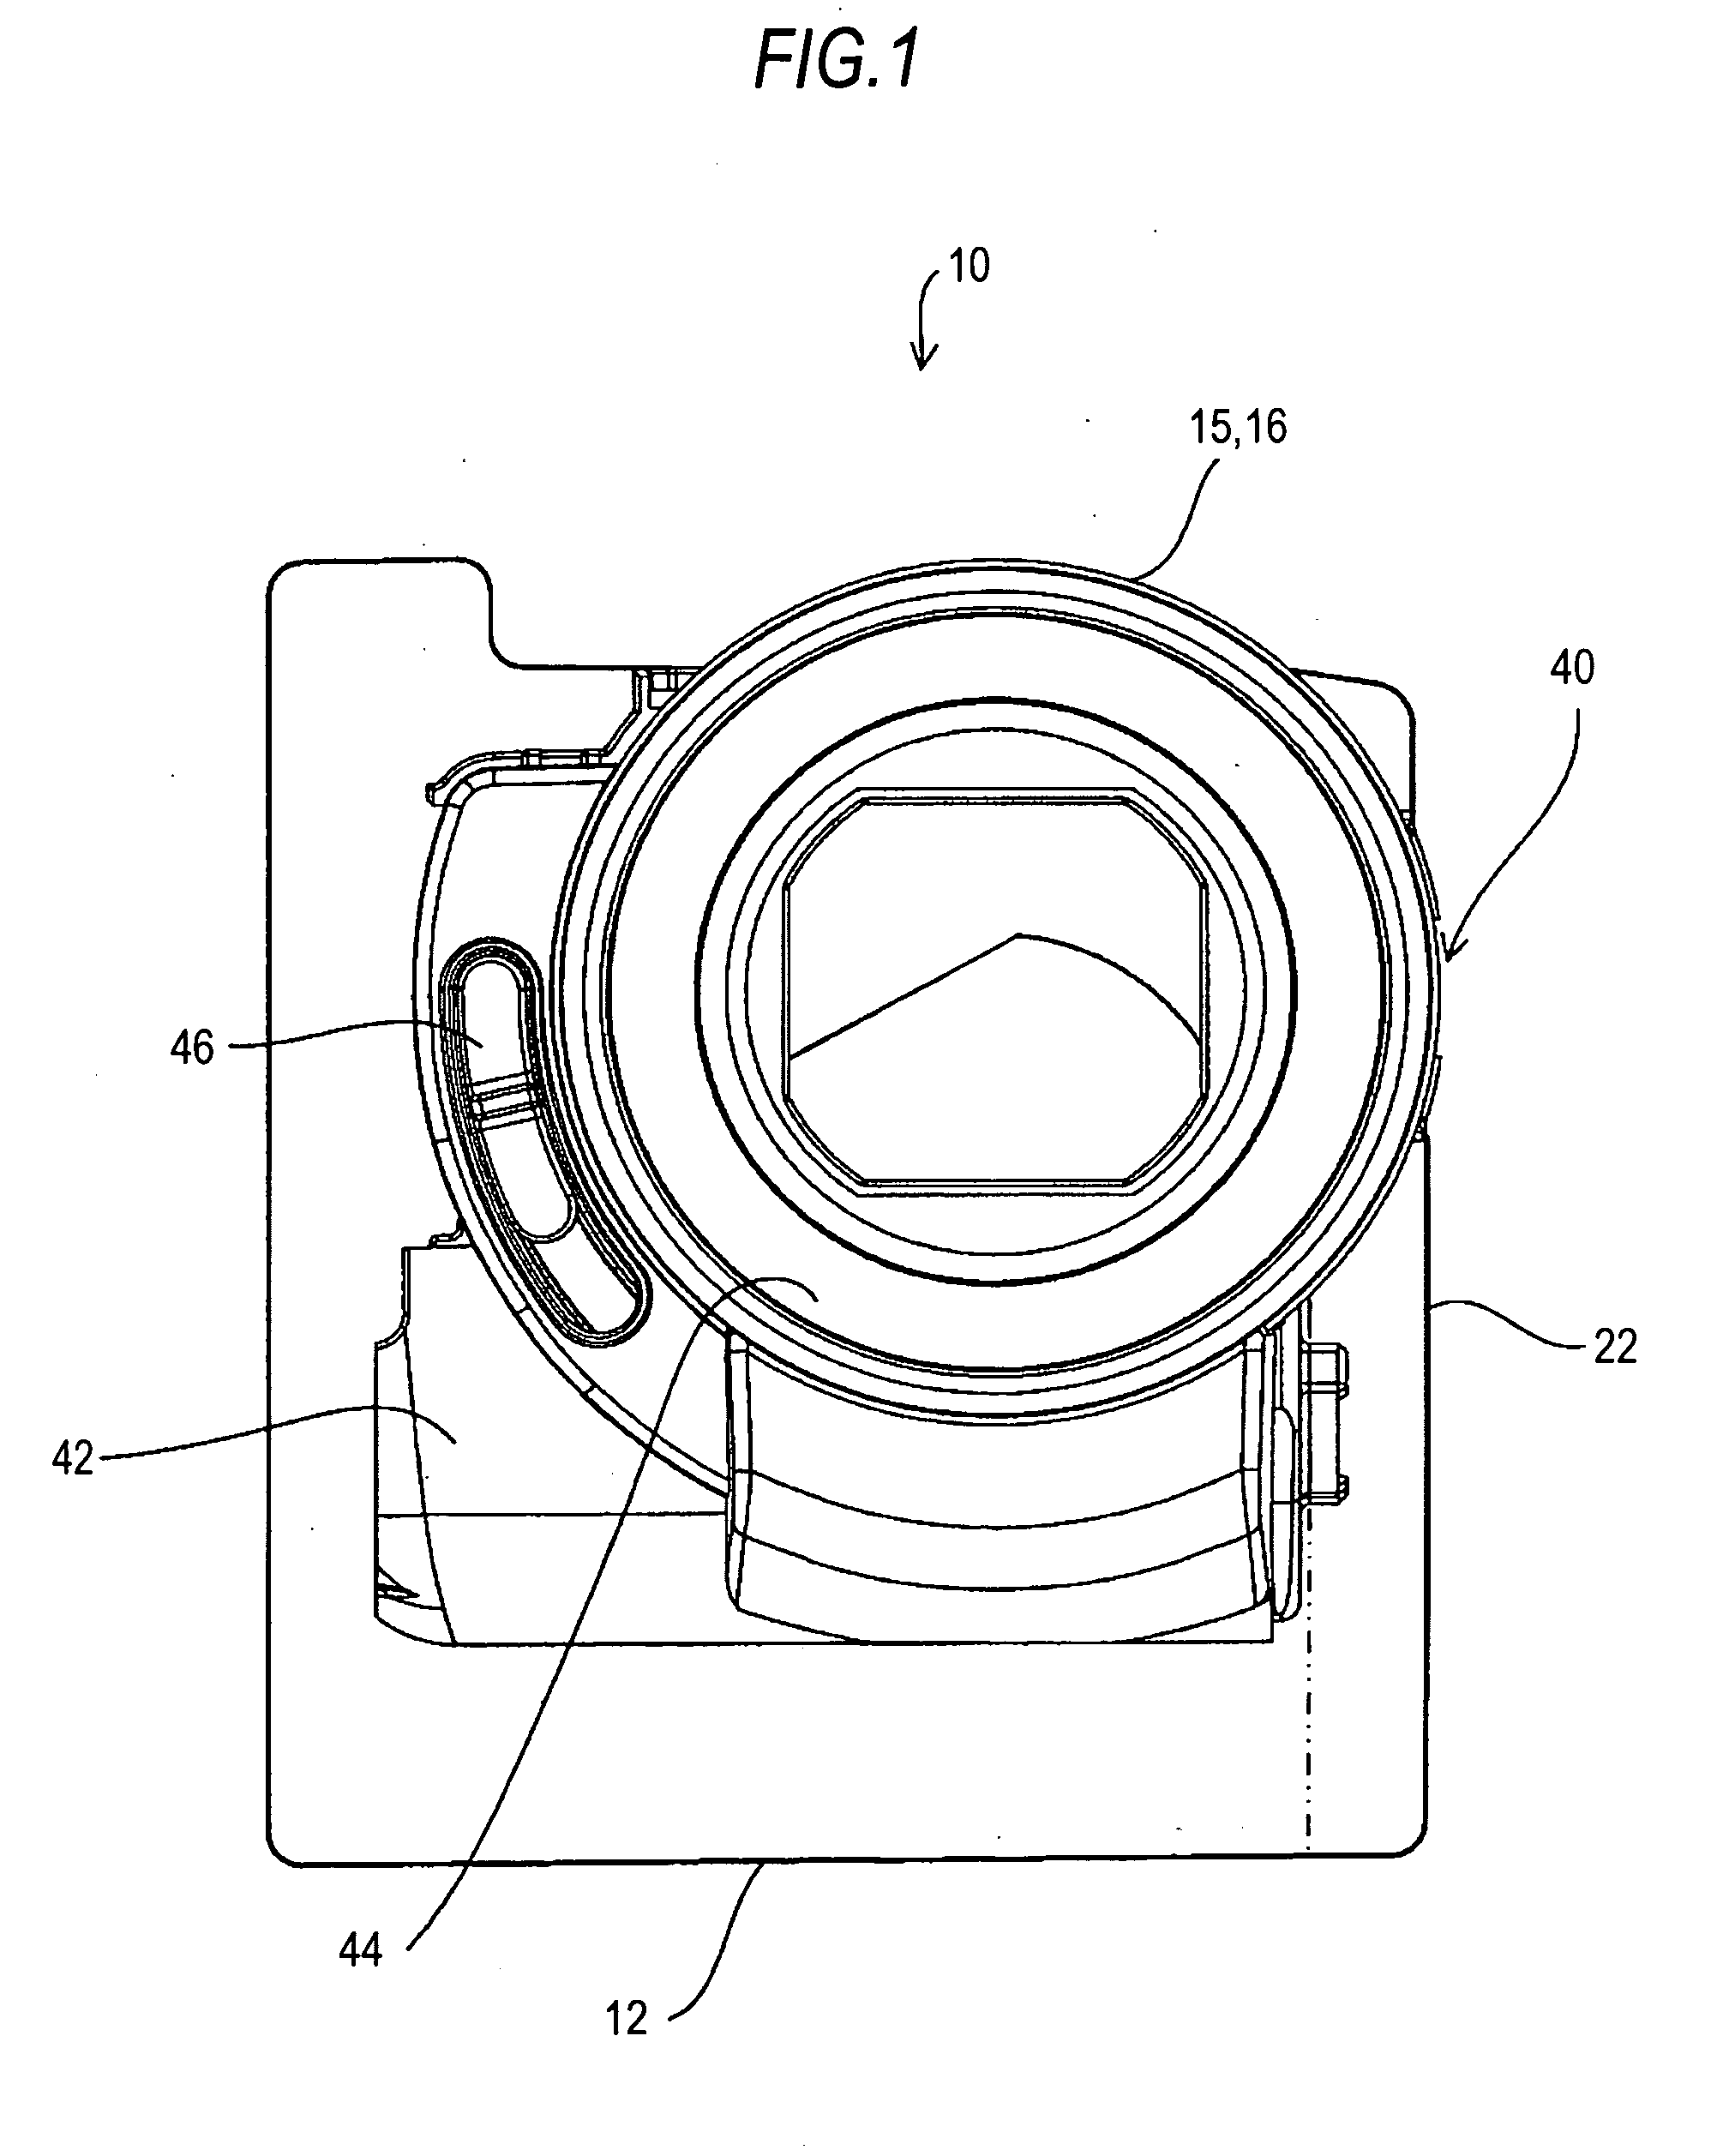 Lens barrier device, lens barrel, and imaging device